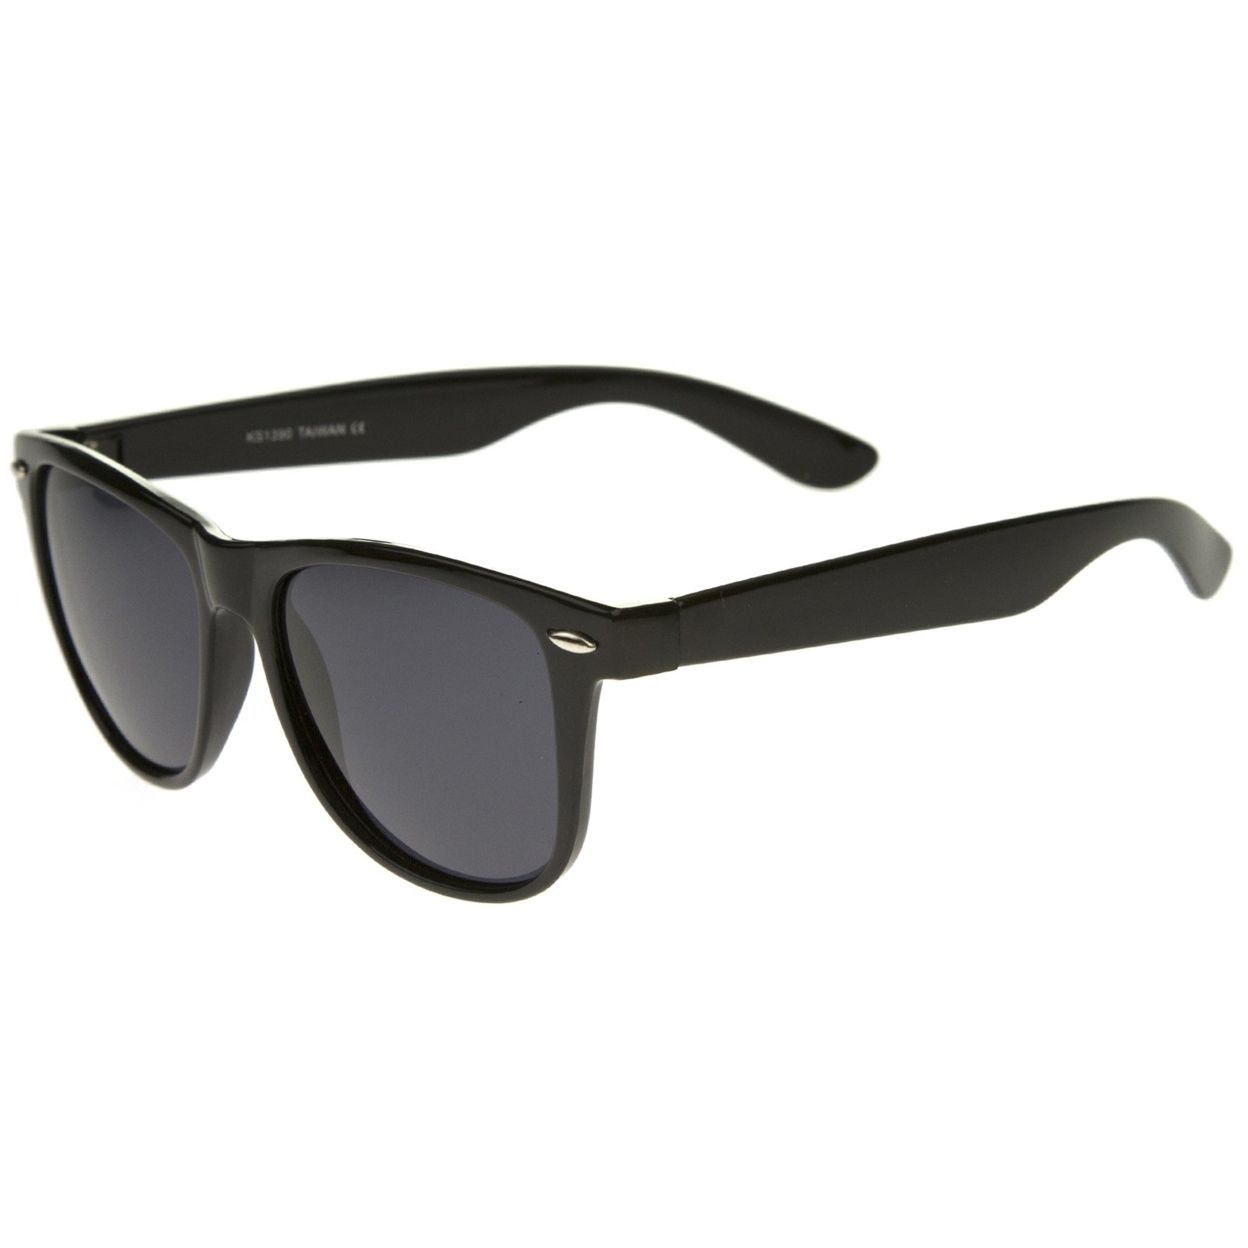 Large Oversize Classic Dark Tinted Lens Horn Rimmed Sunglasses 55mm - Black / Smoke